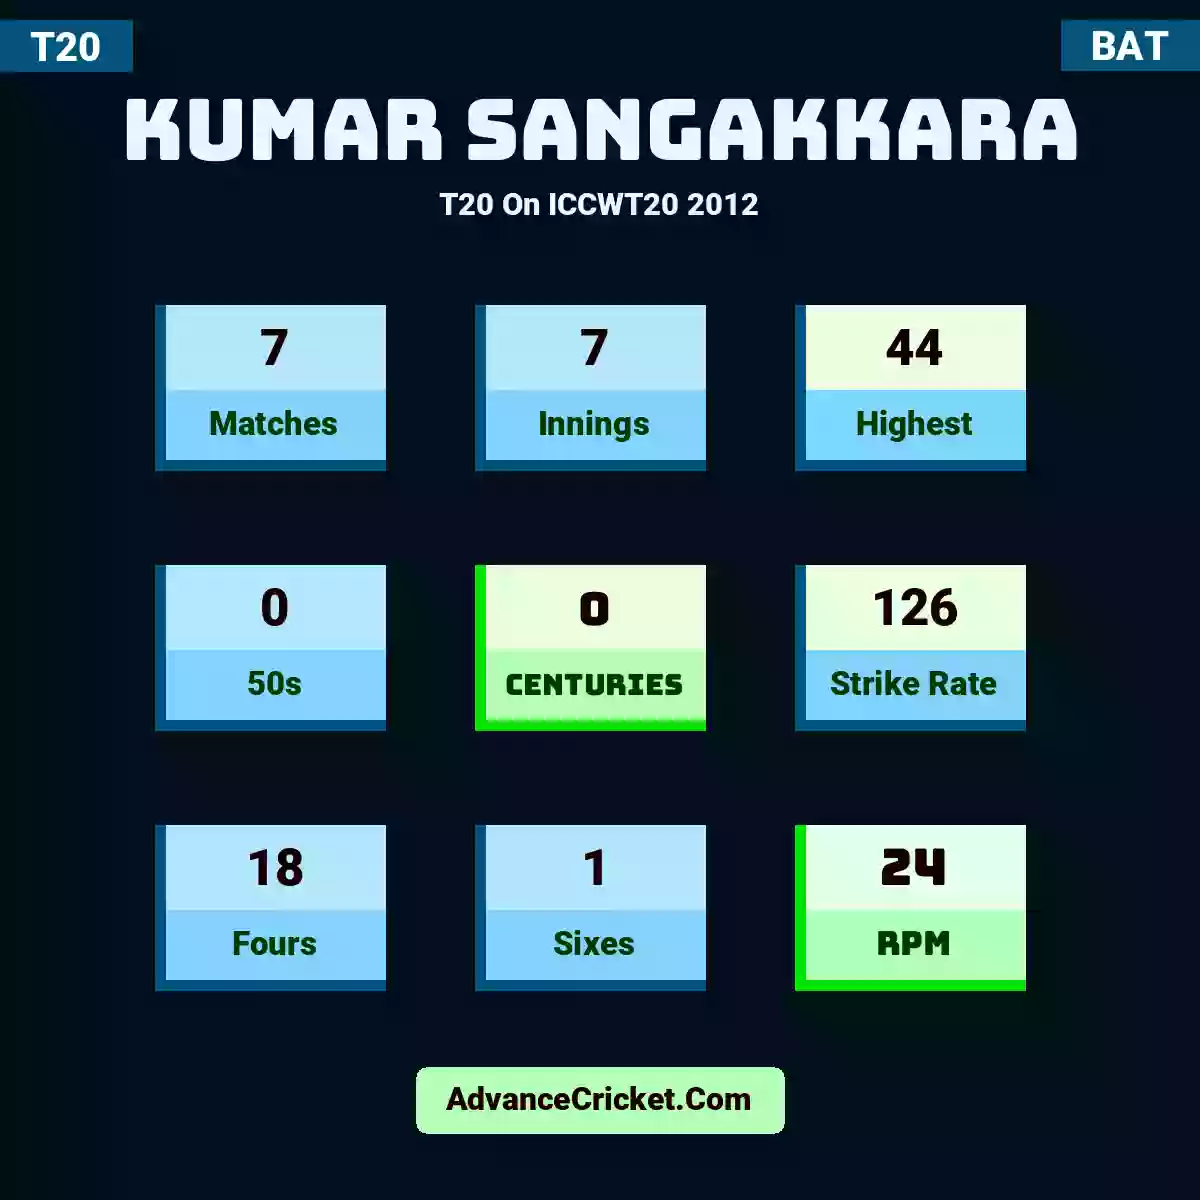 Kumar Sangakkara T20  On ICCWT20 2012, Kumar Sangakkara played 7 matches, scored 44 runs as highest, 0 half-centuries, and 0 centuries, with a strike rate of 126. K.Sangakkara hit 18 fours and 1 sixes, with an RPM of 24.